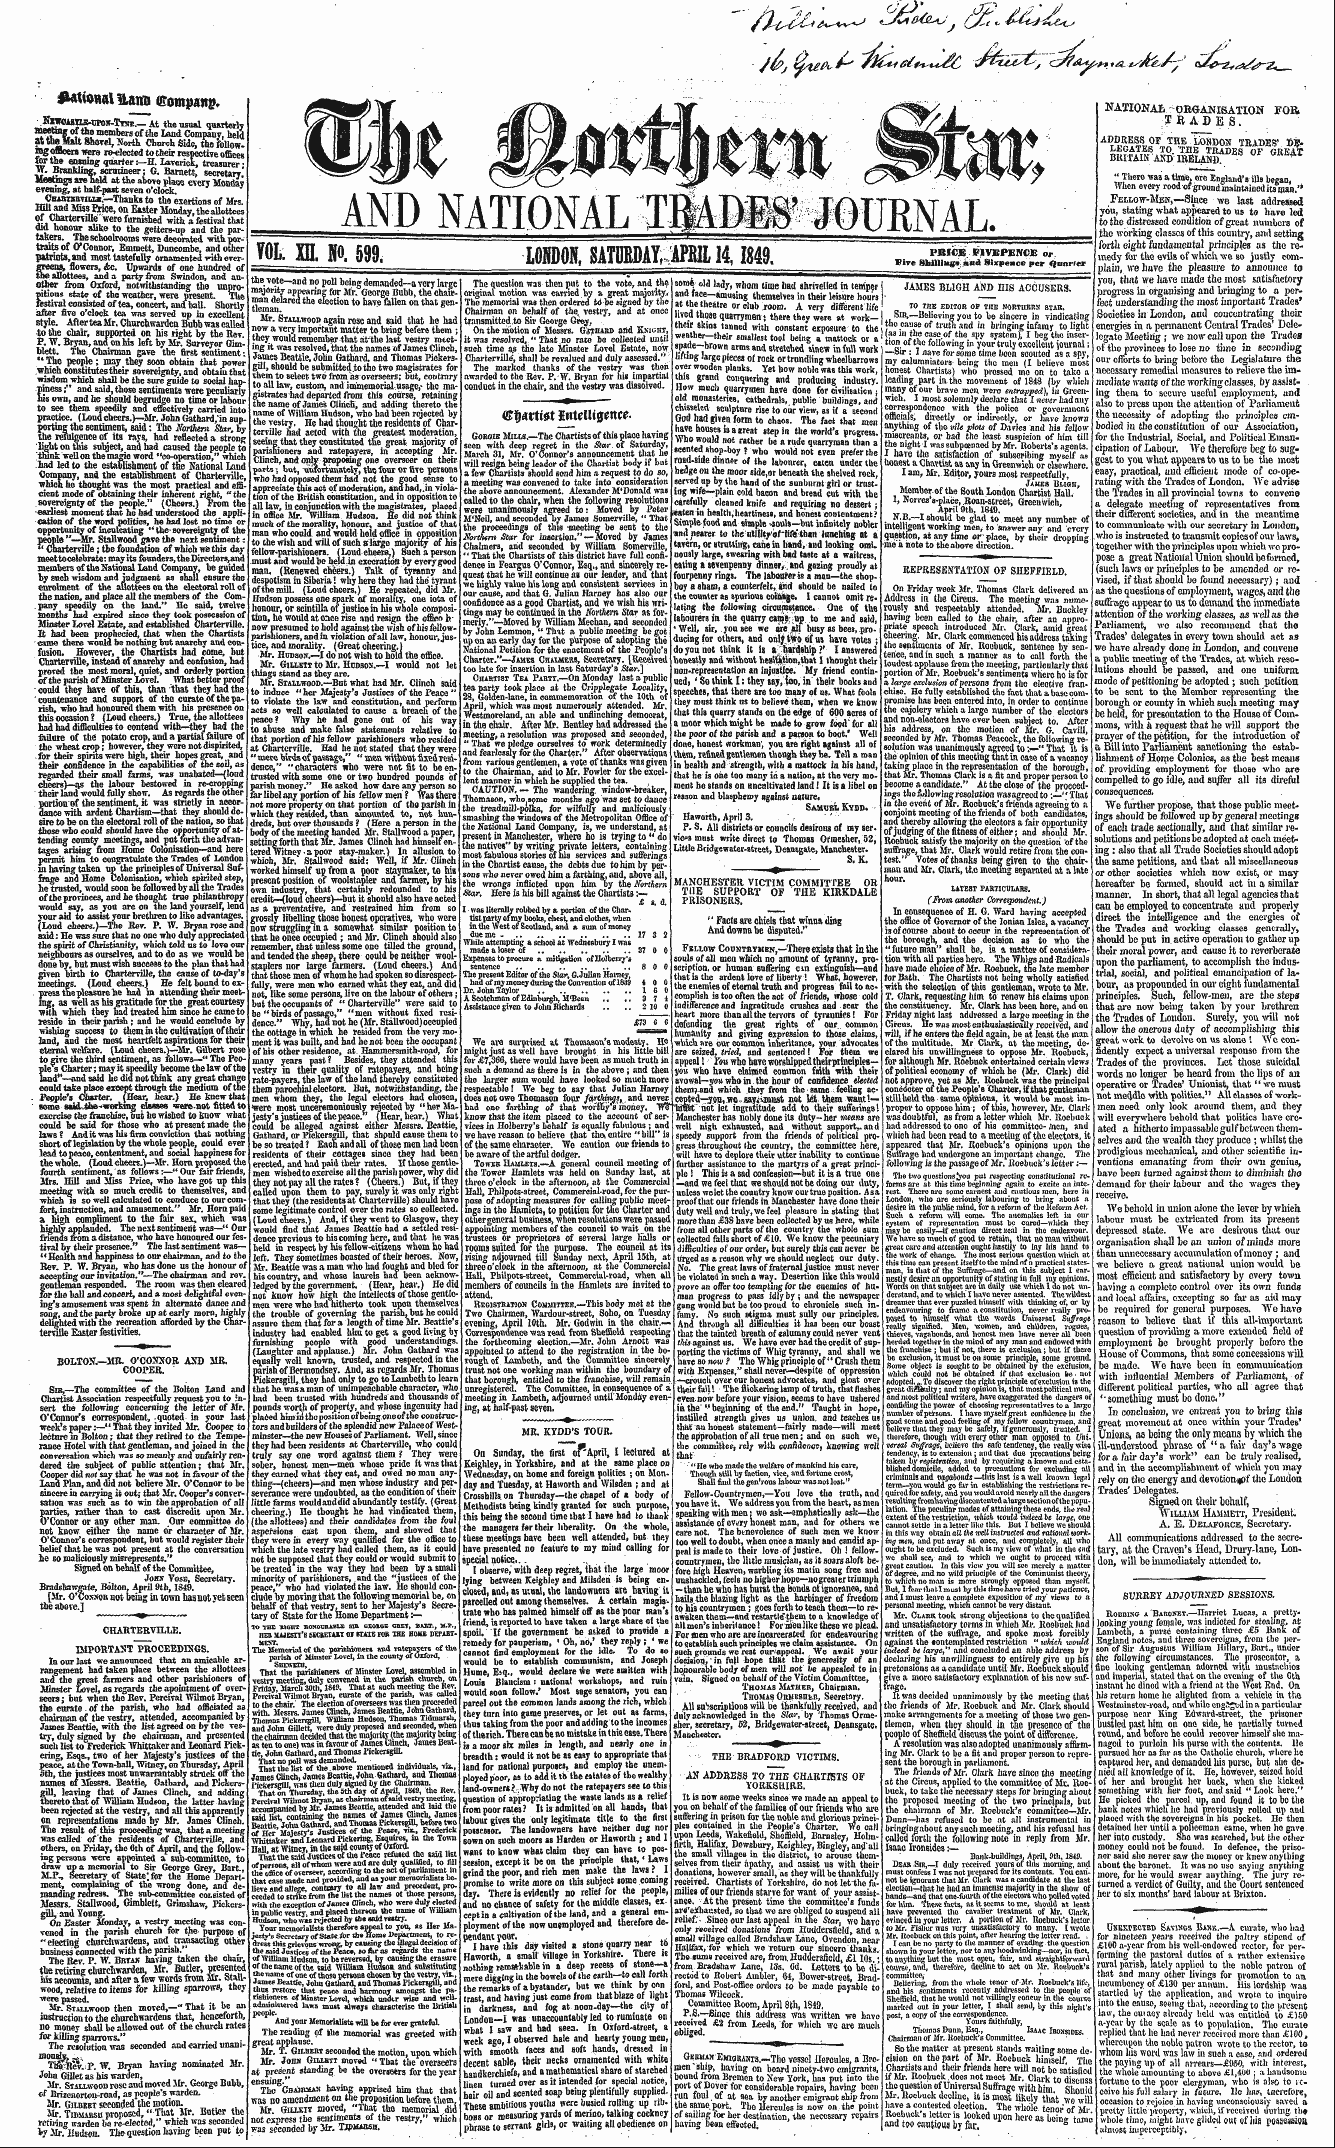 Northern Star (1837-1852): jS F Y, 3rd edition - Representation Op Sheffield. On Friday W...